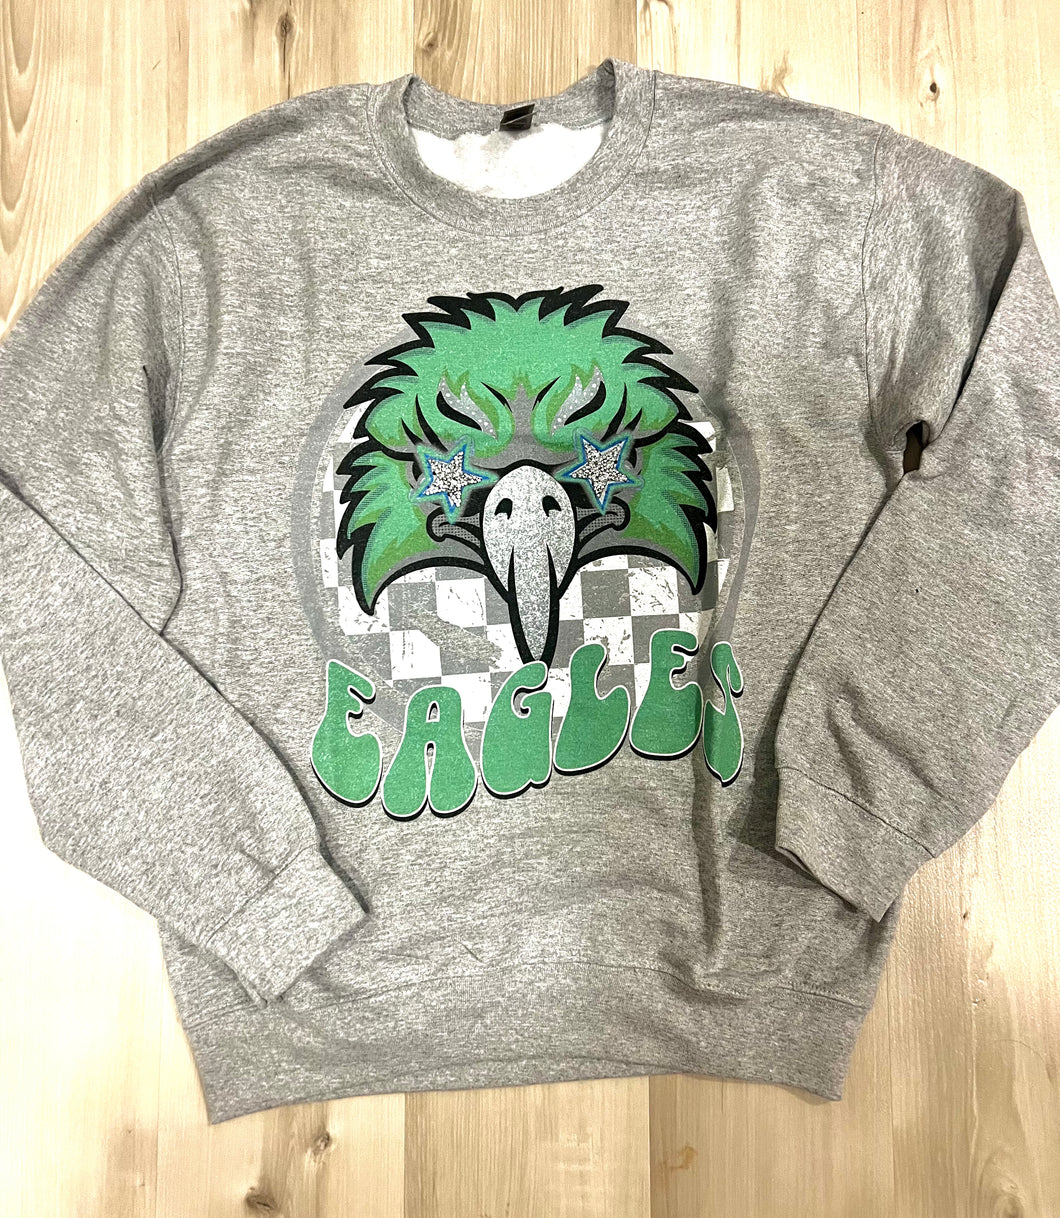 Retro Eagles Sweatshirt (Green)